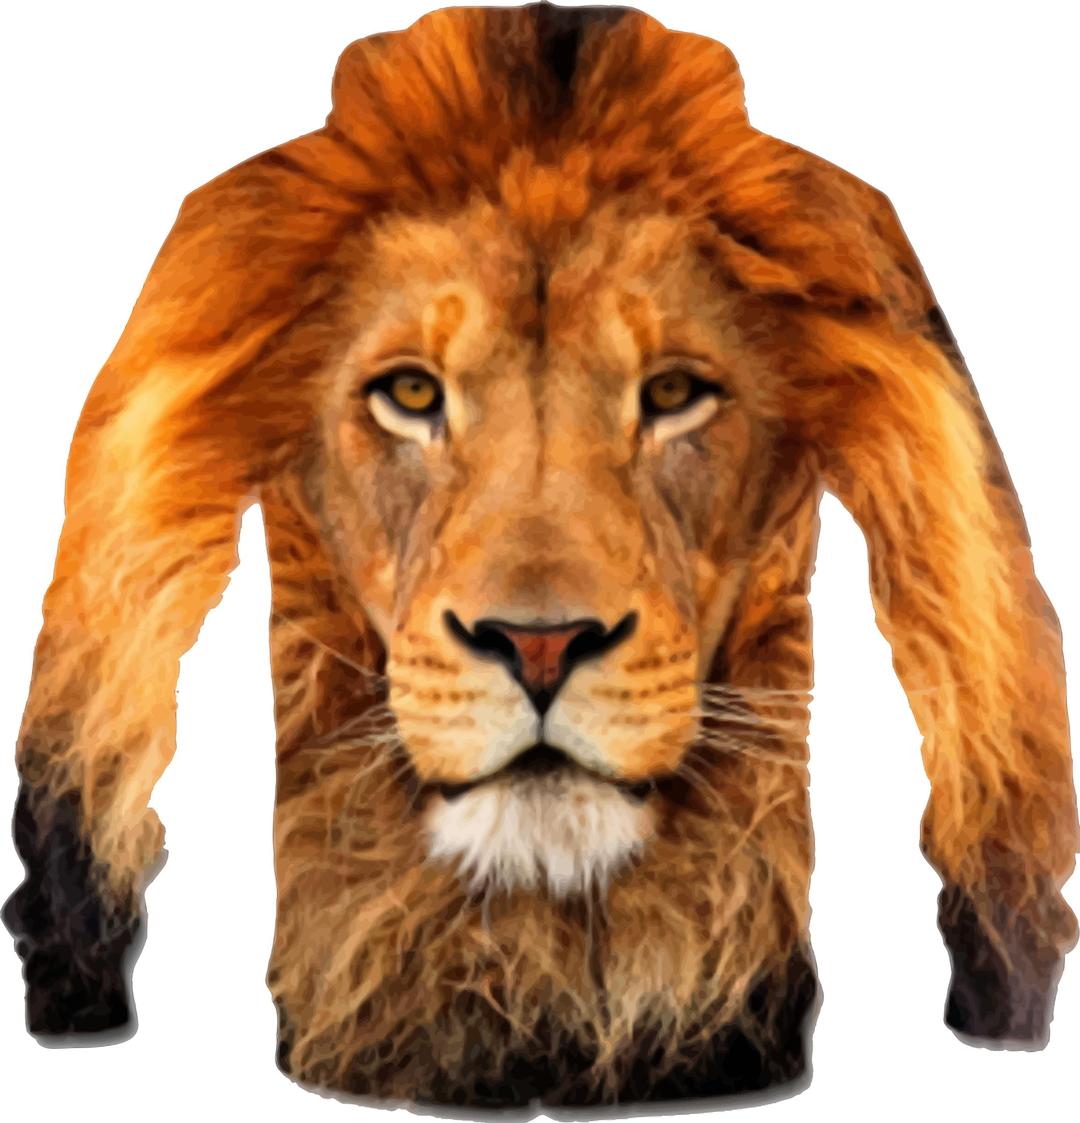 Akramly's lion T-shirt vectorized png transparent